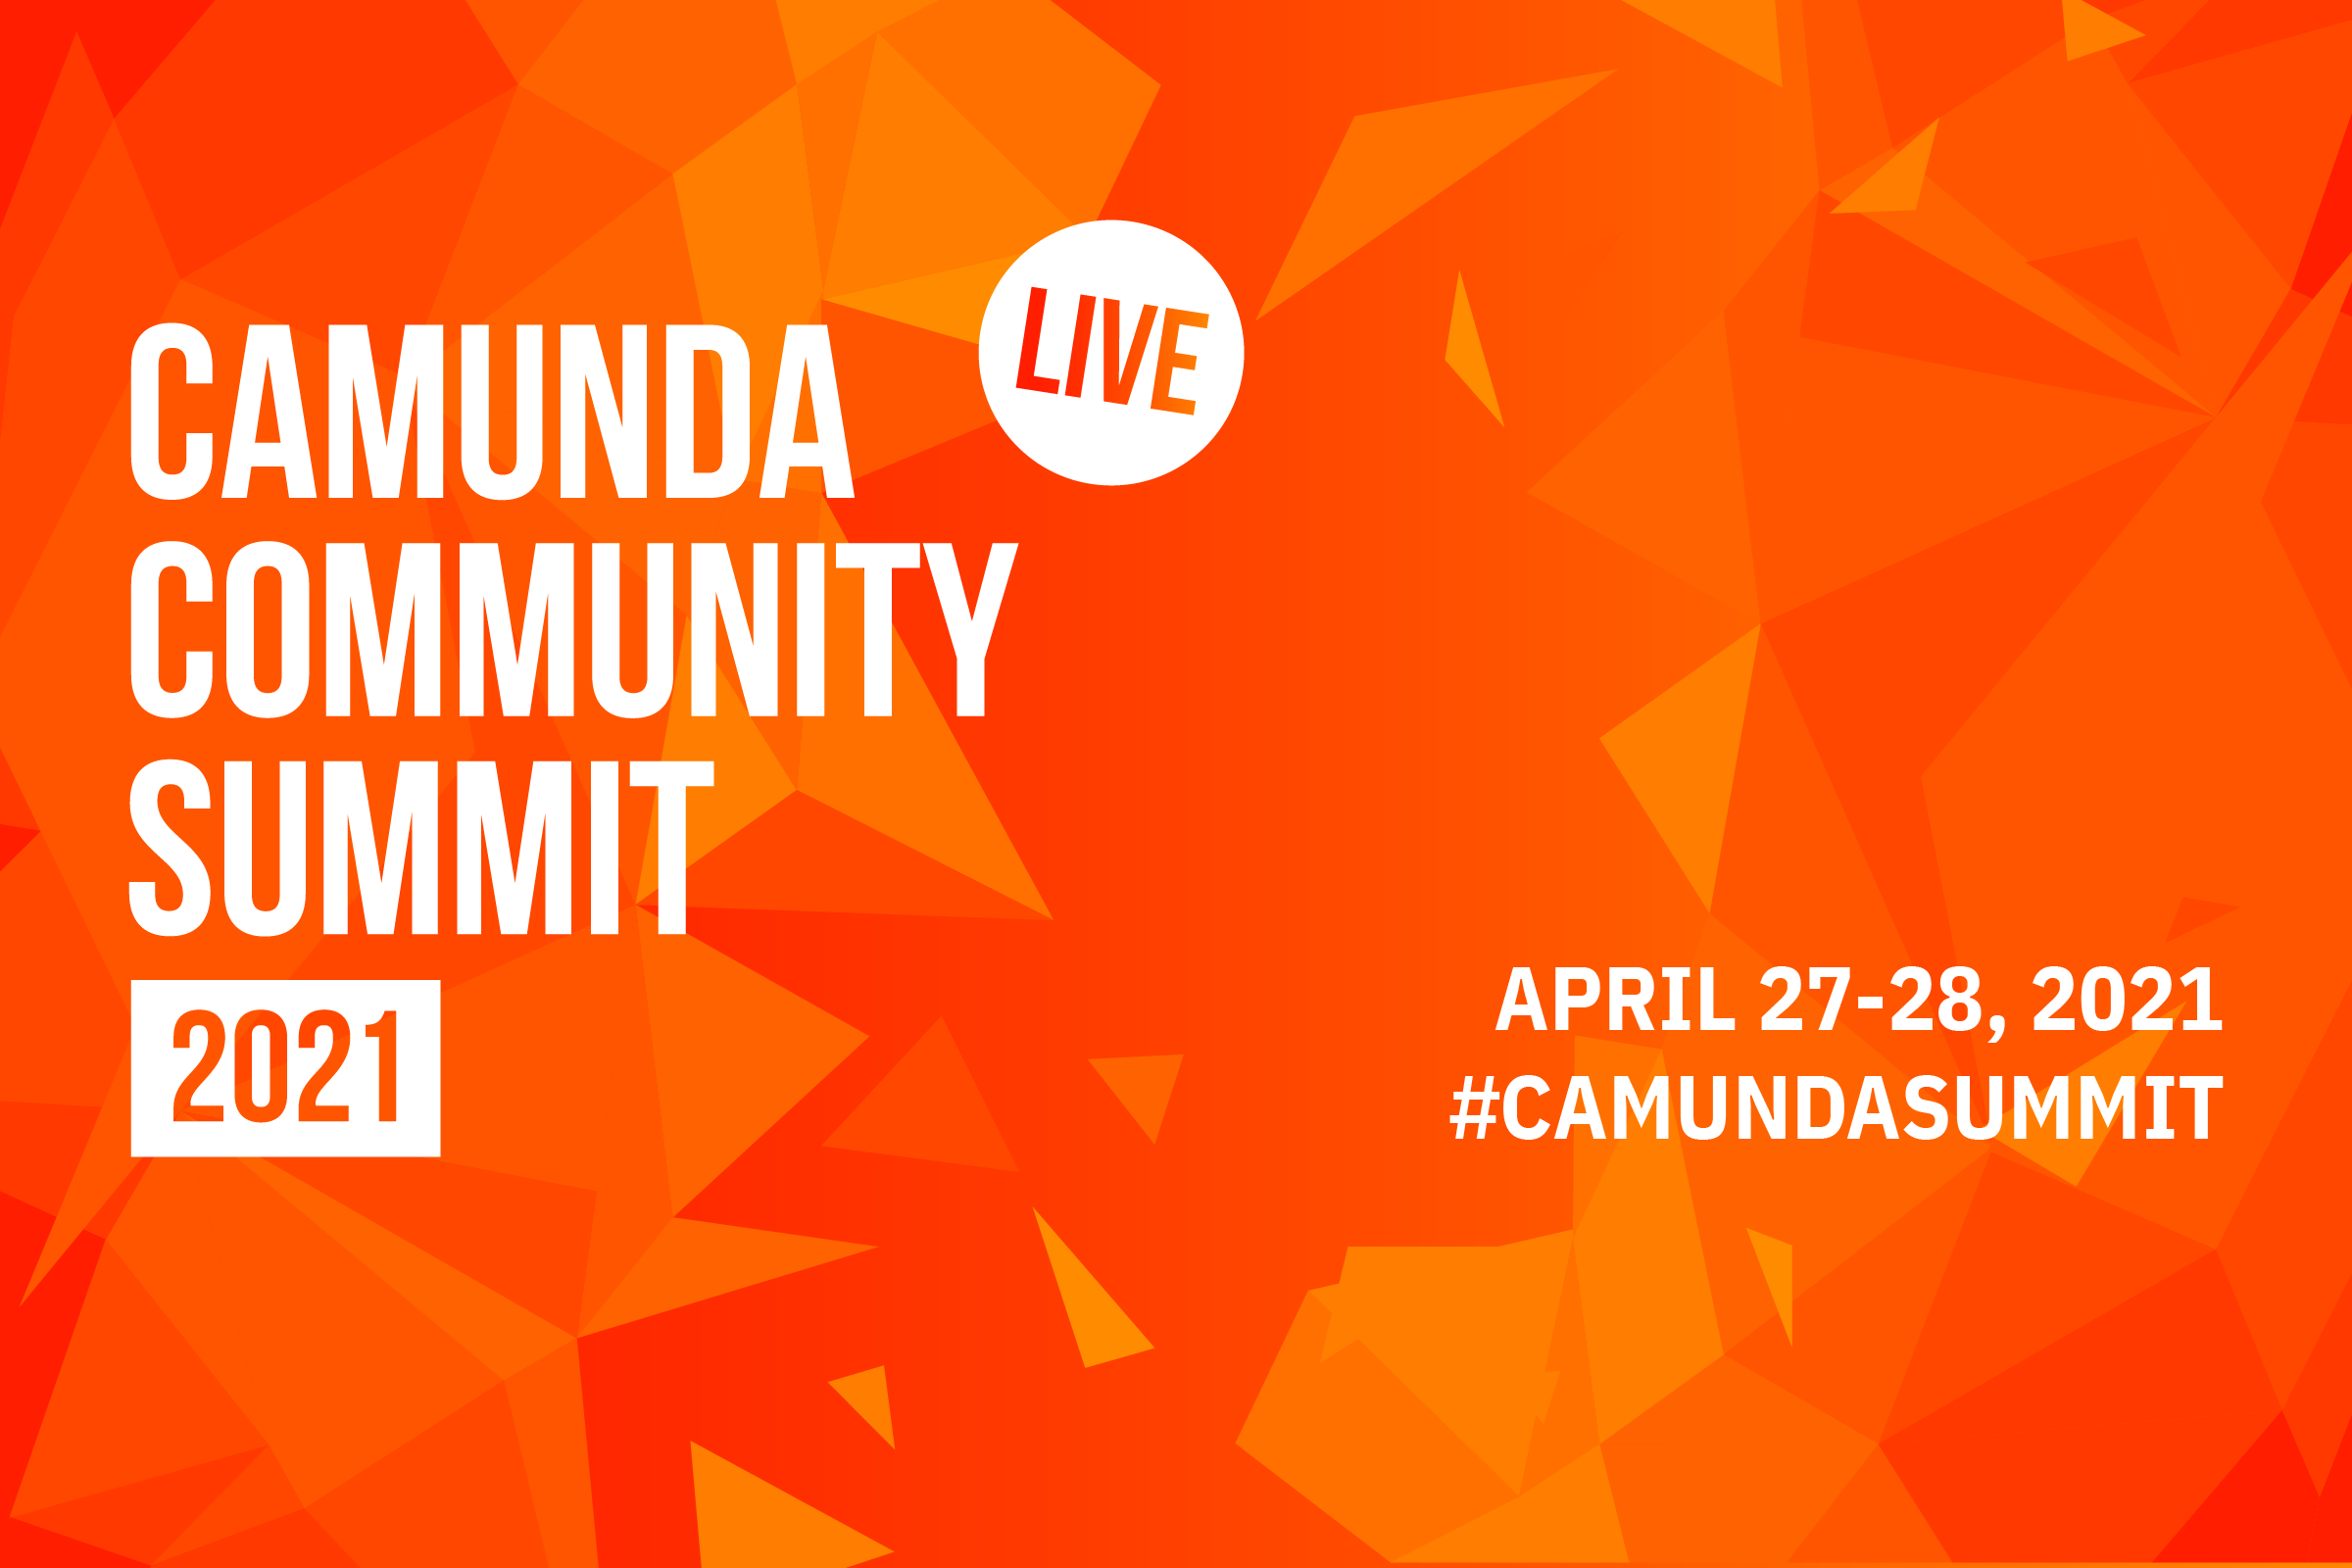 Welcome to the Camunda Community Summit 2021